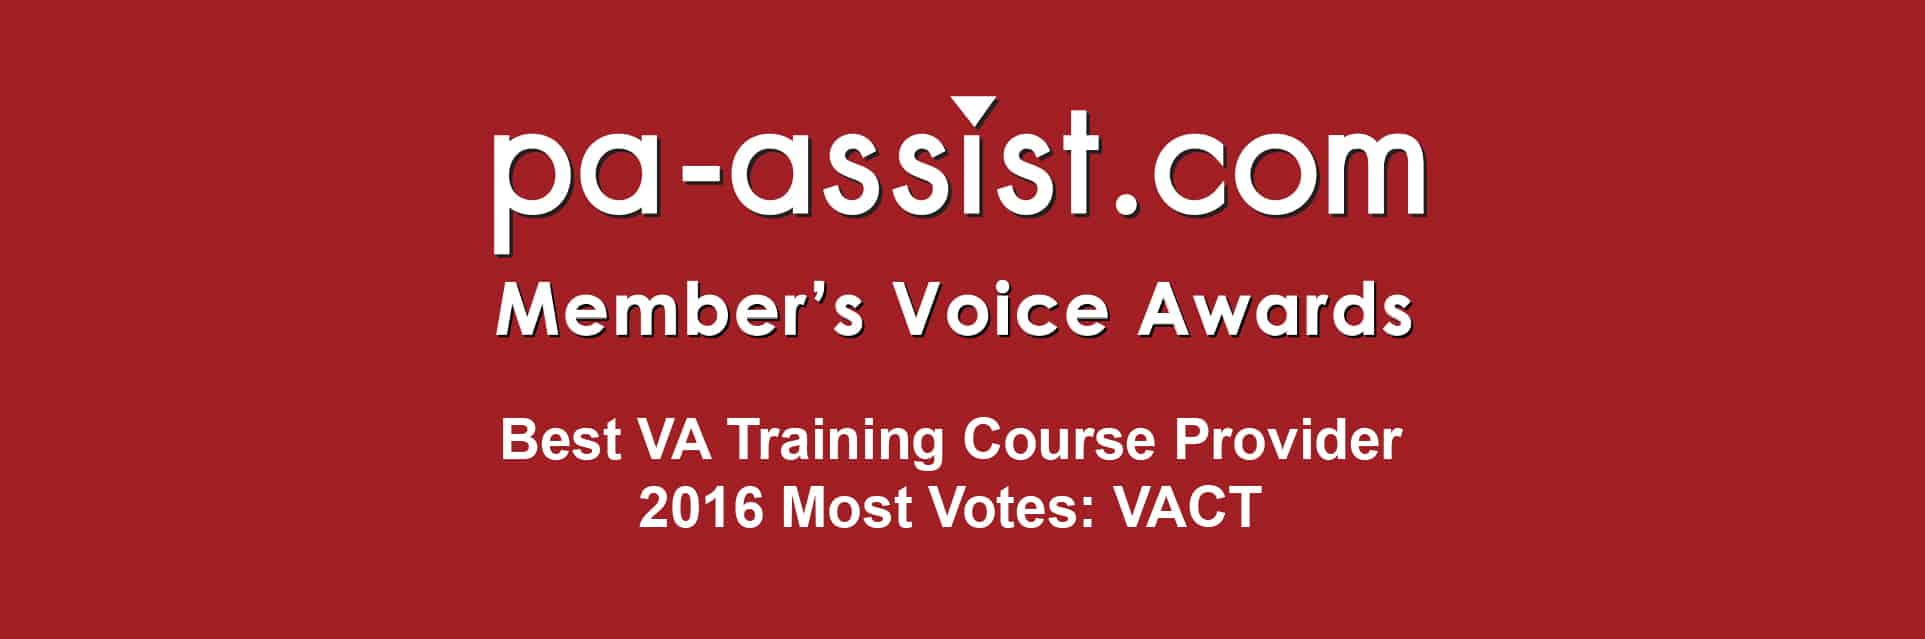 Member_Voice_Award-VACT-red-sq